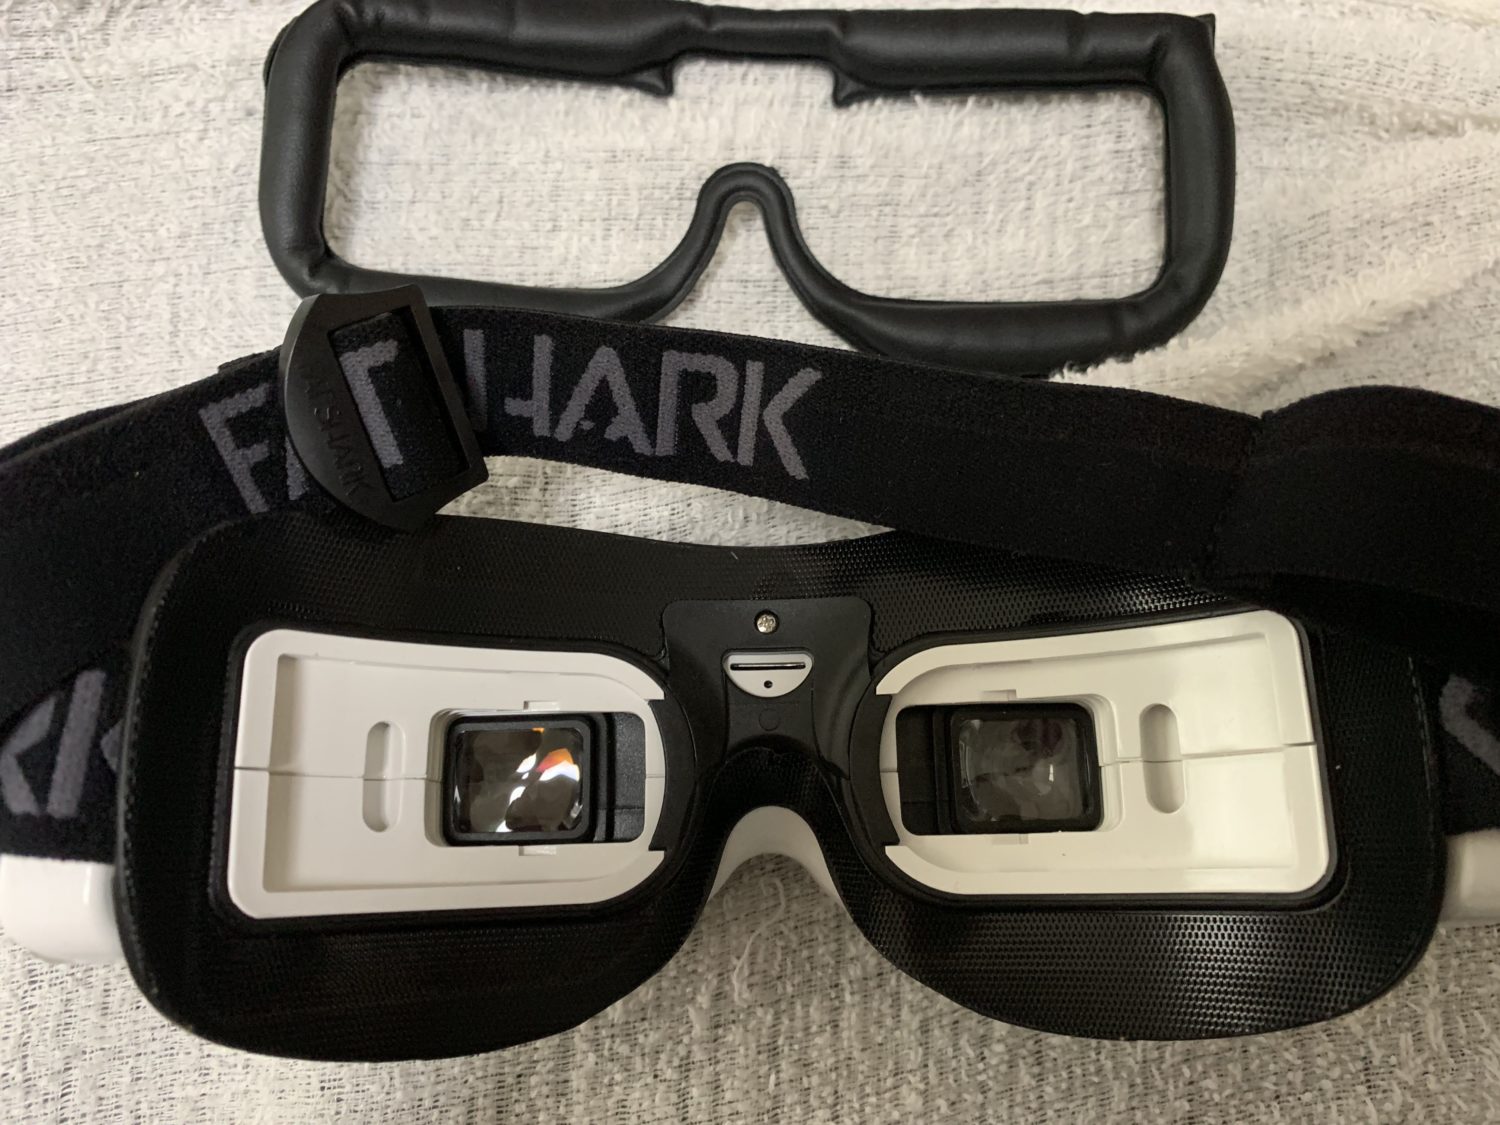 「FatShark HDO」IPD瞳孔間距離の幅を広げる方法【FPVゴーグル】